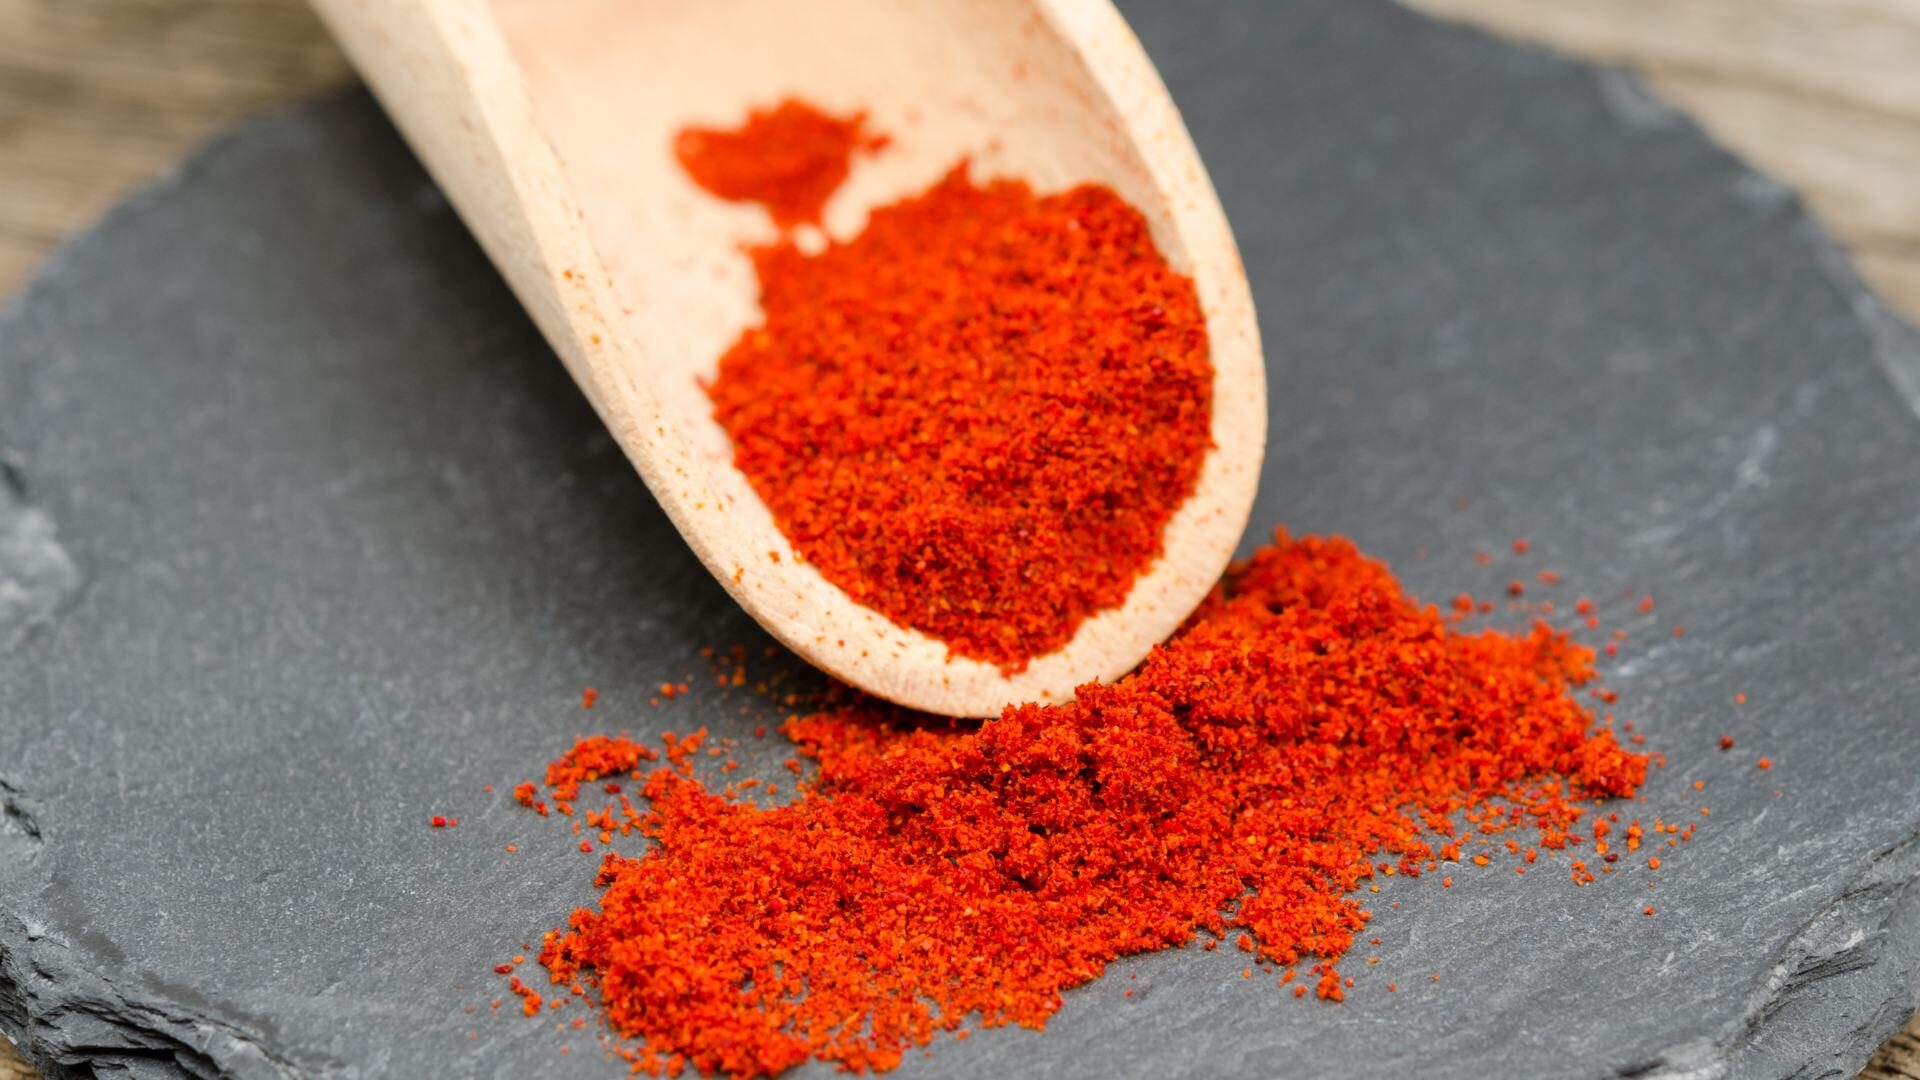 Benefici delle spezie: paprika dolce in polvere